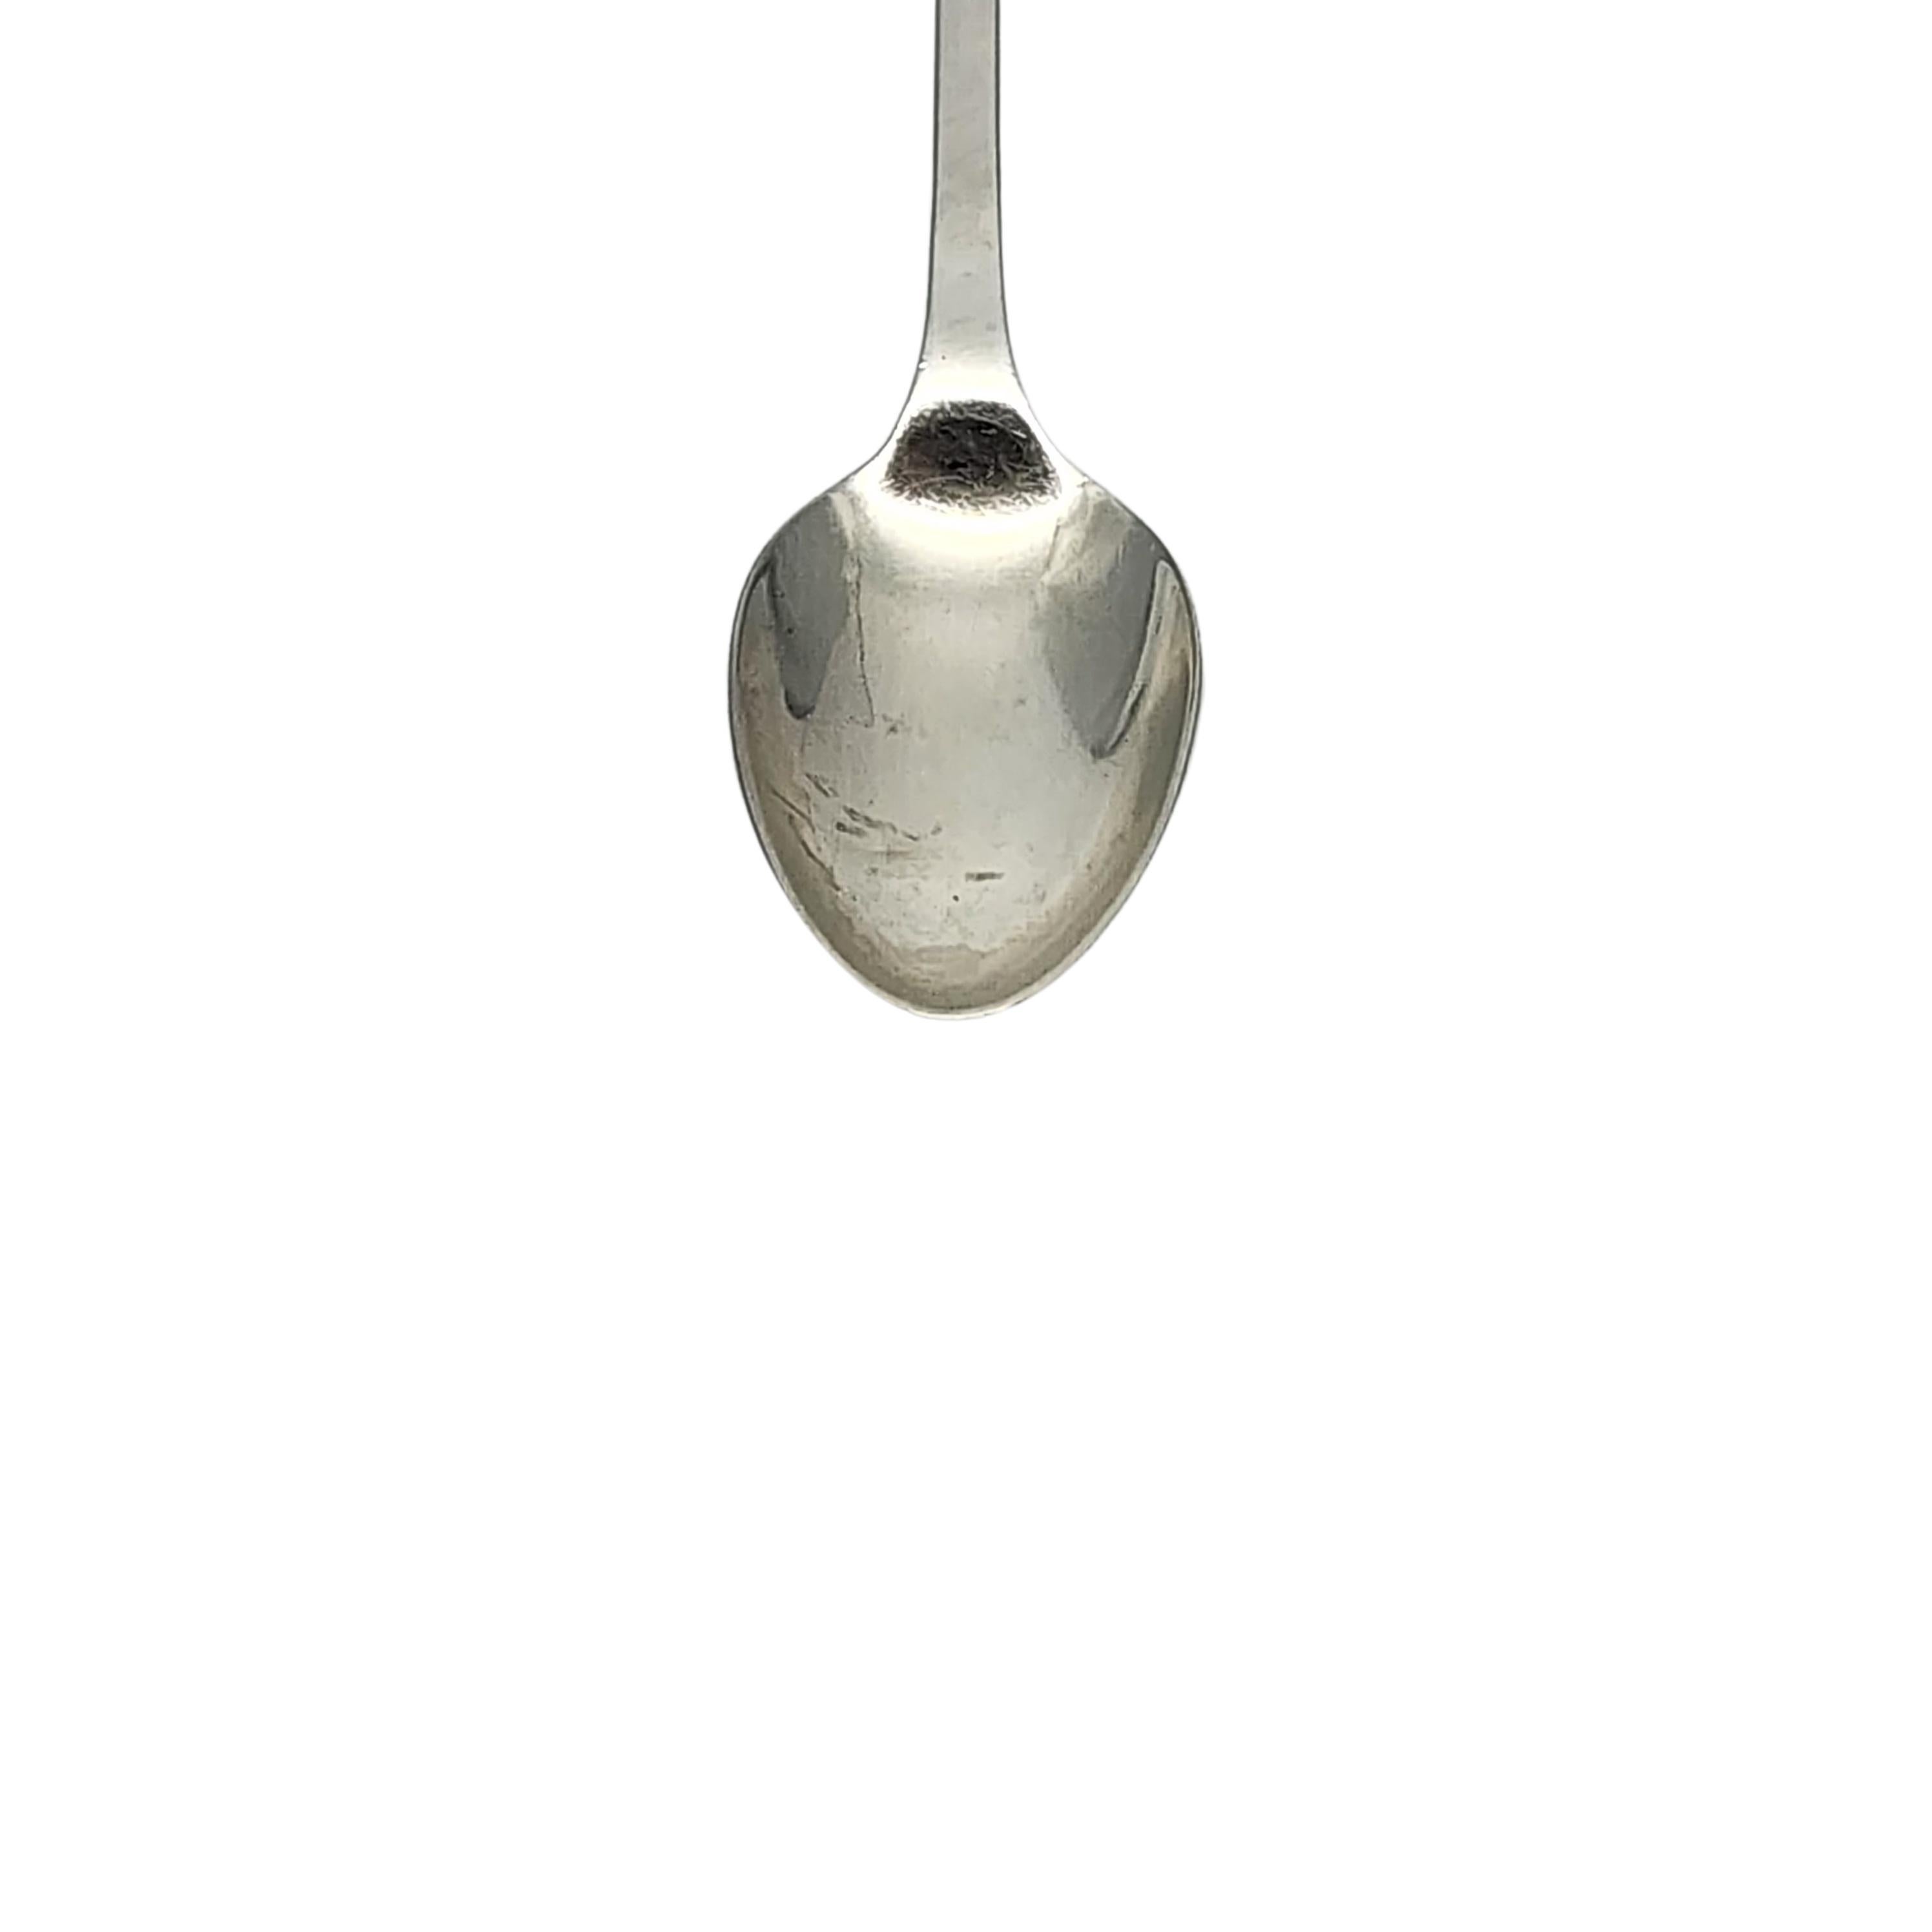 Tiffany & Co Faneuil Sterling Silver Baby Feeding Spoon #15490 1